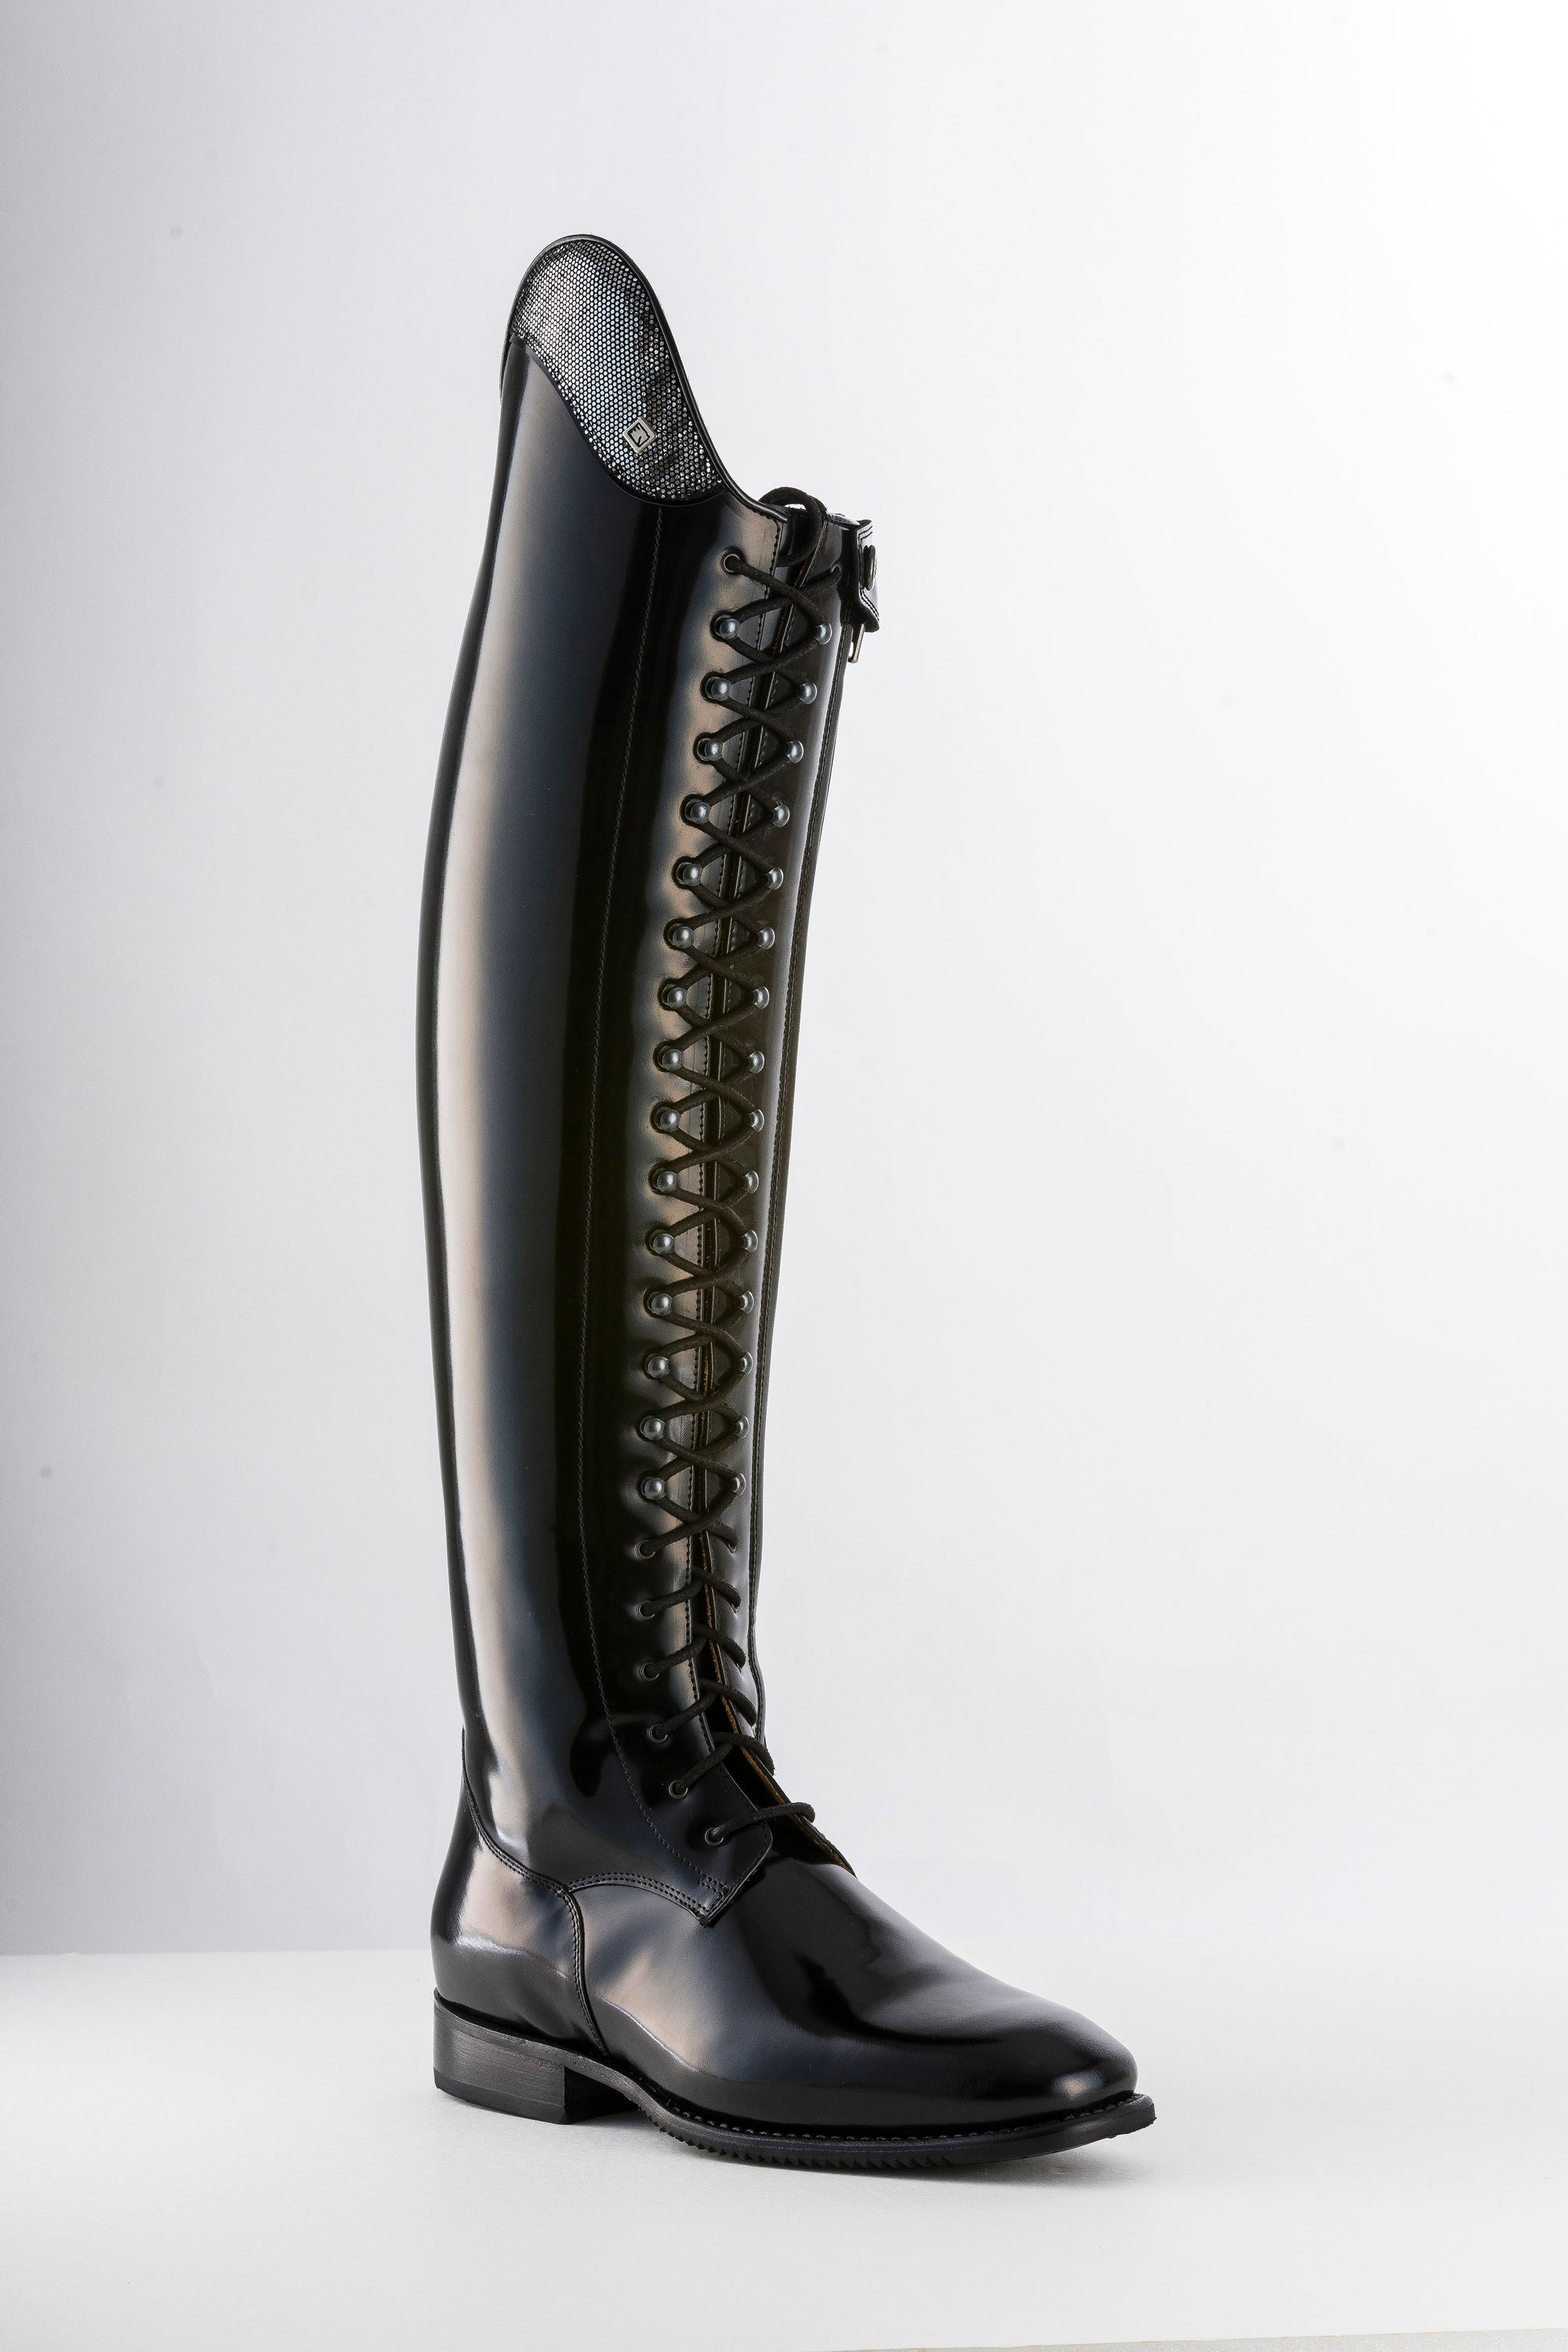 Deniro Incanto Botticelli Dressage Boot